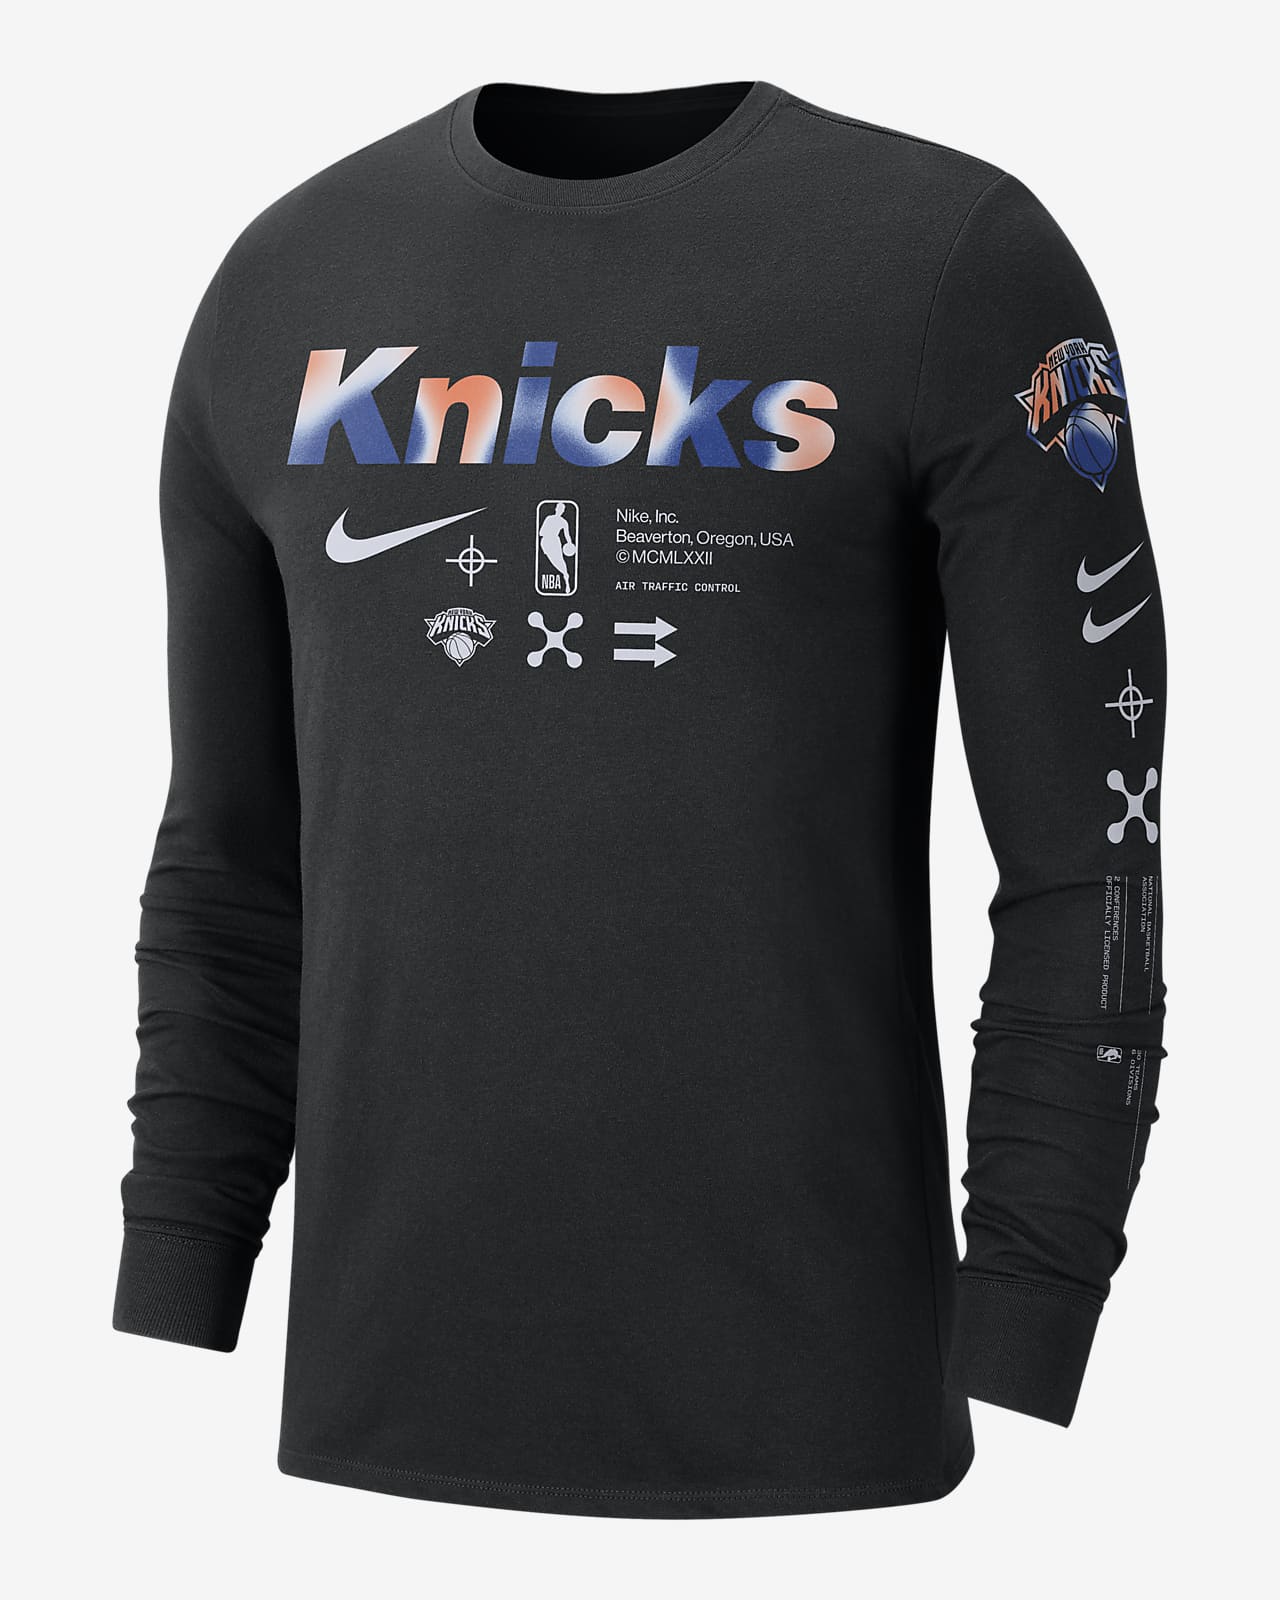 Playera de manga larga Nike de la NBA para hombre New York Knicks